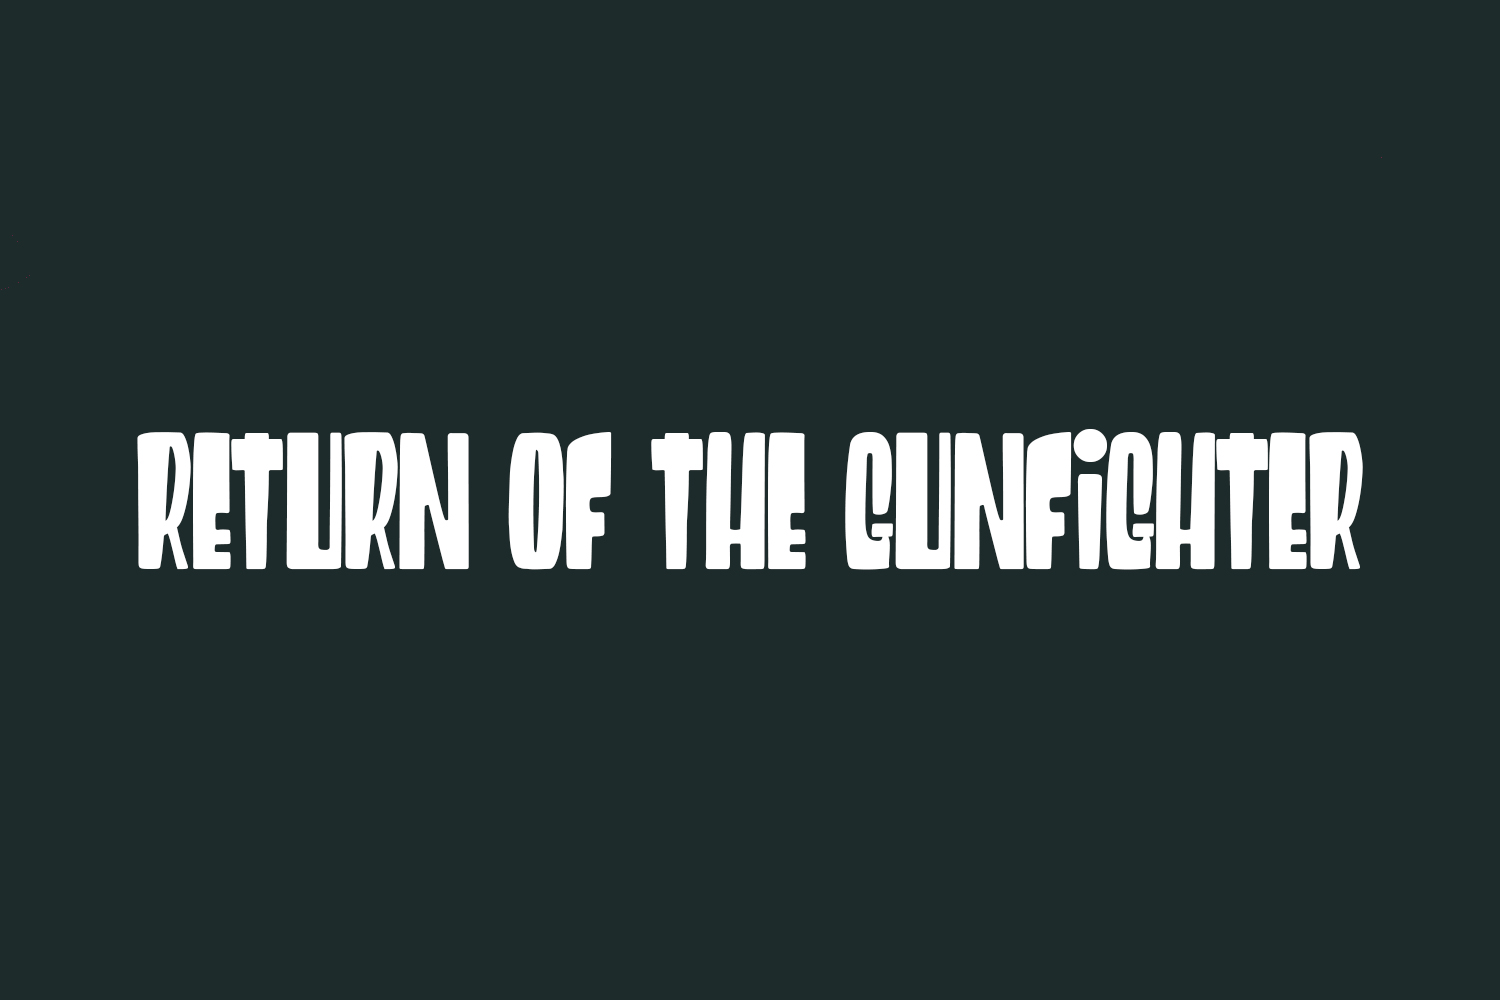 Return of the Gunfighter Free Font